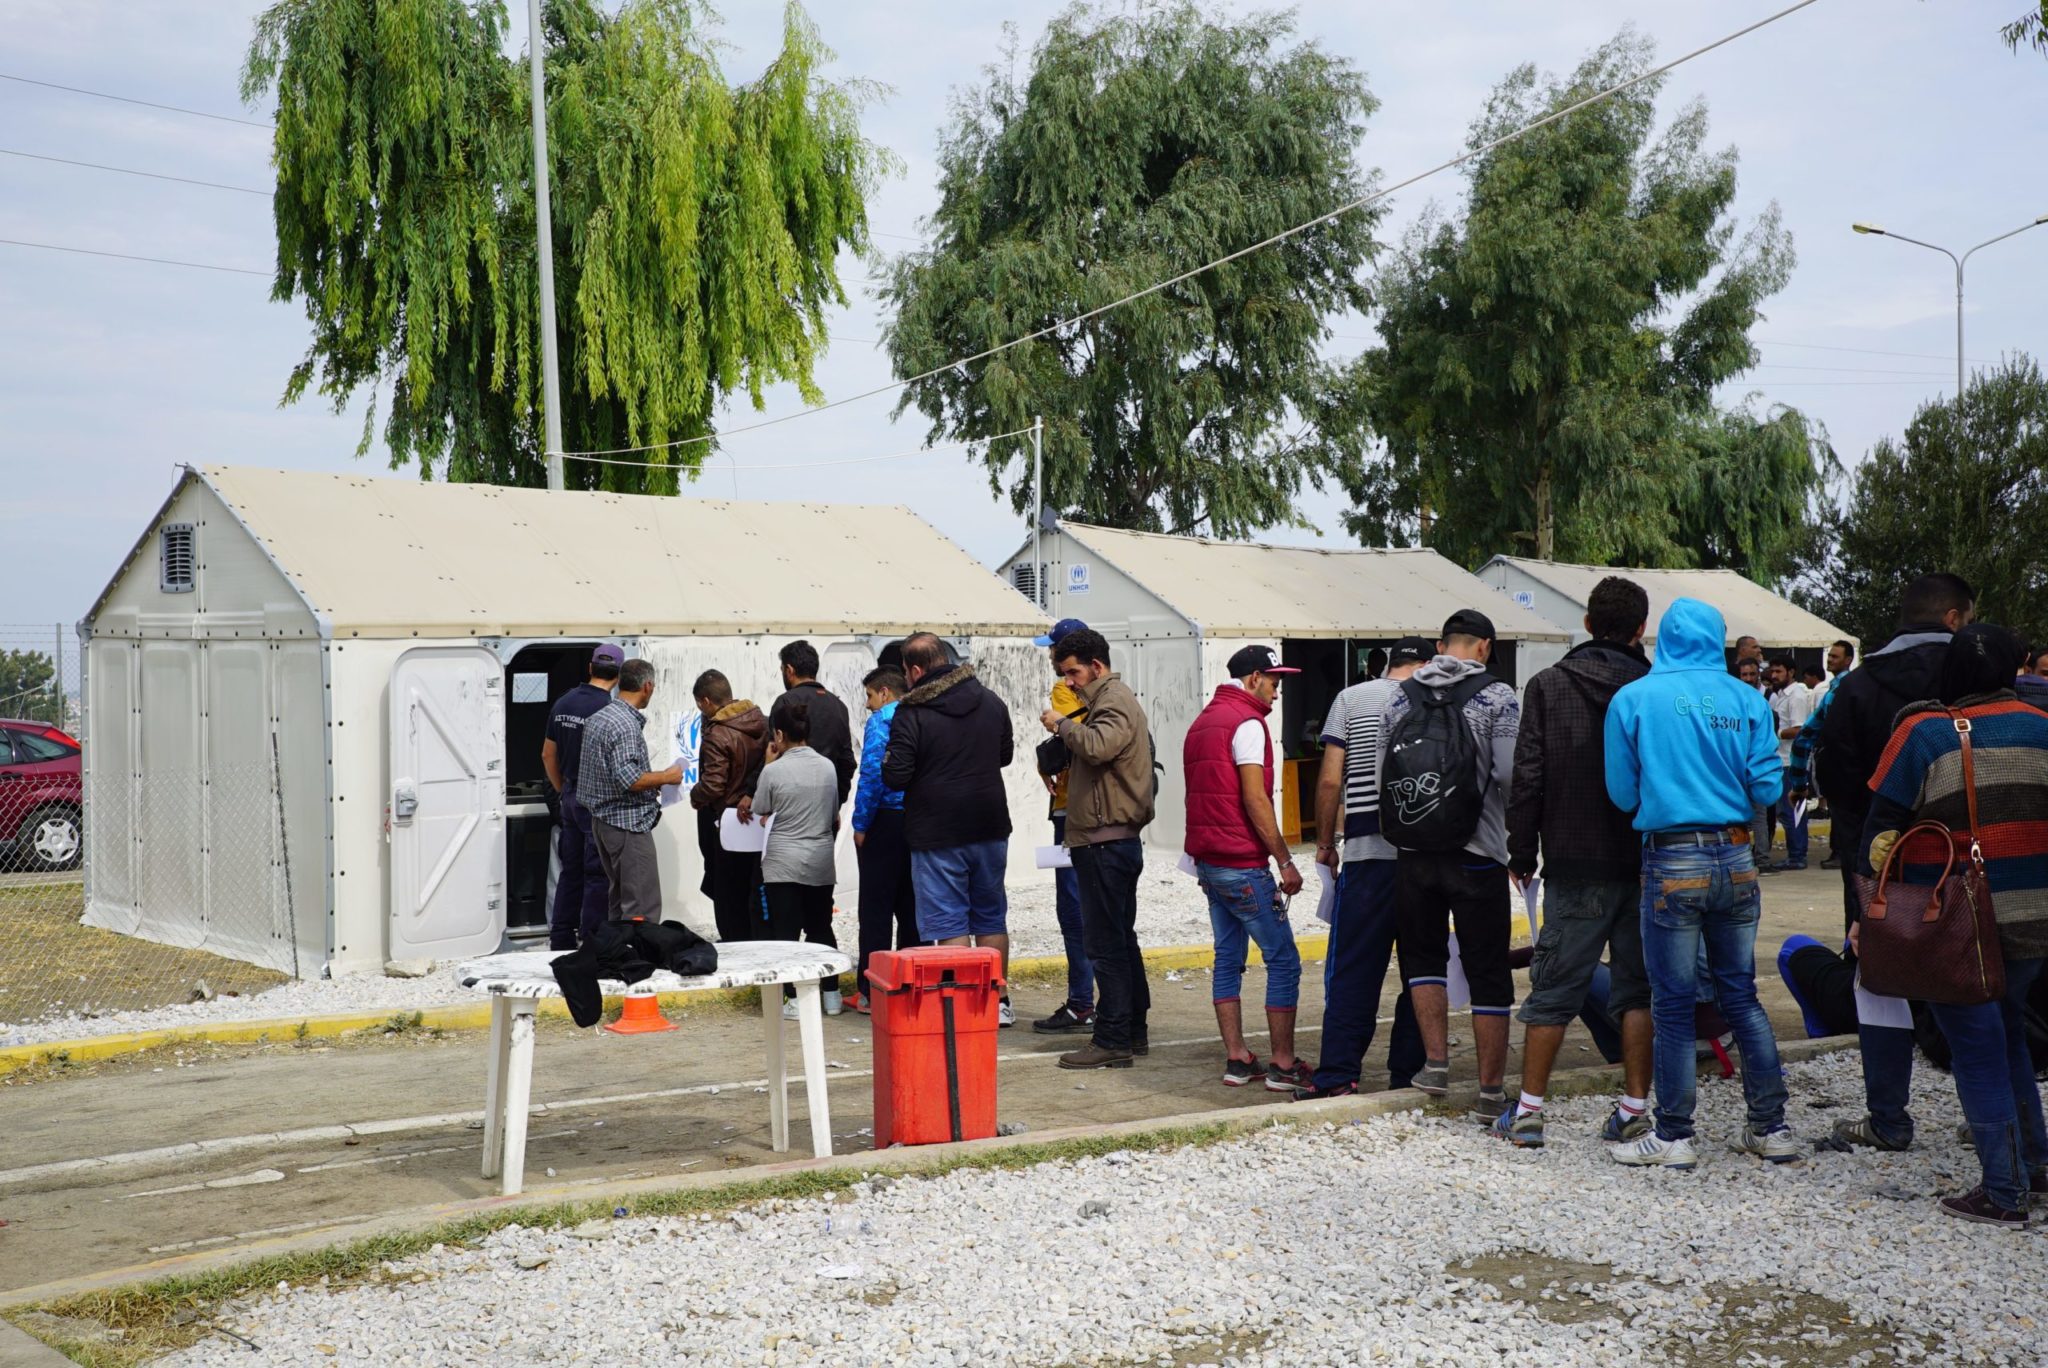 Delivering RHUs in Greece during Europe’s refugee crisis